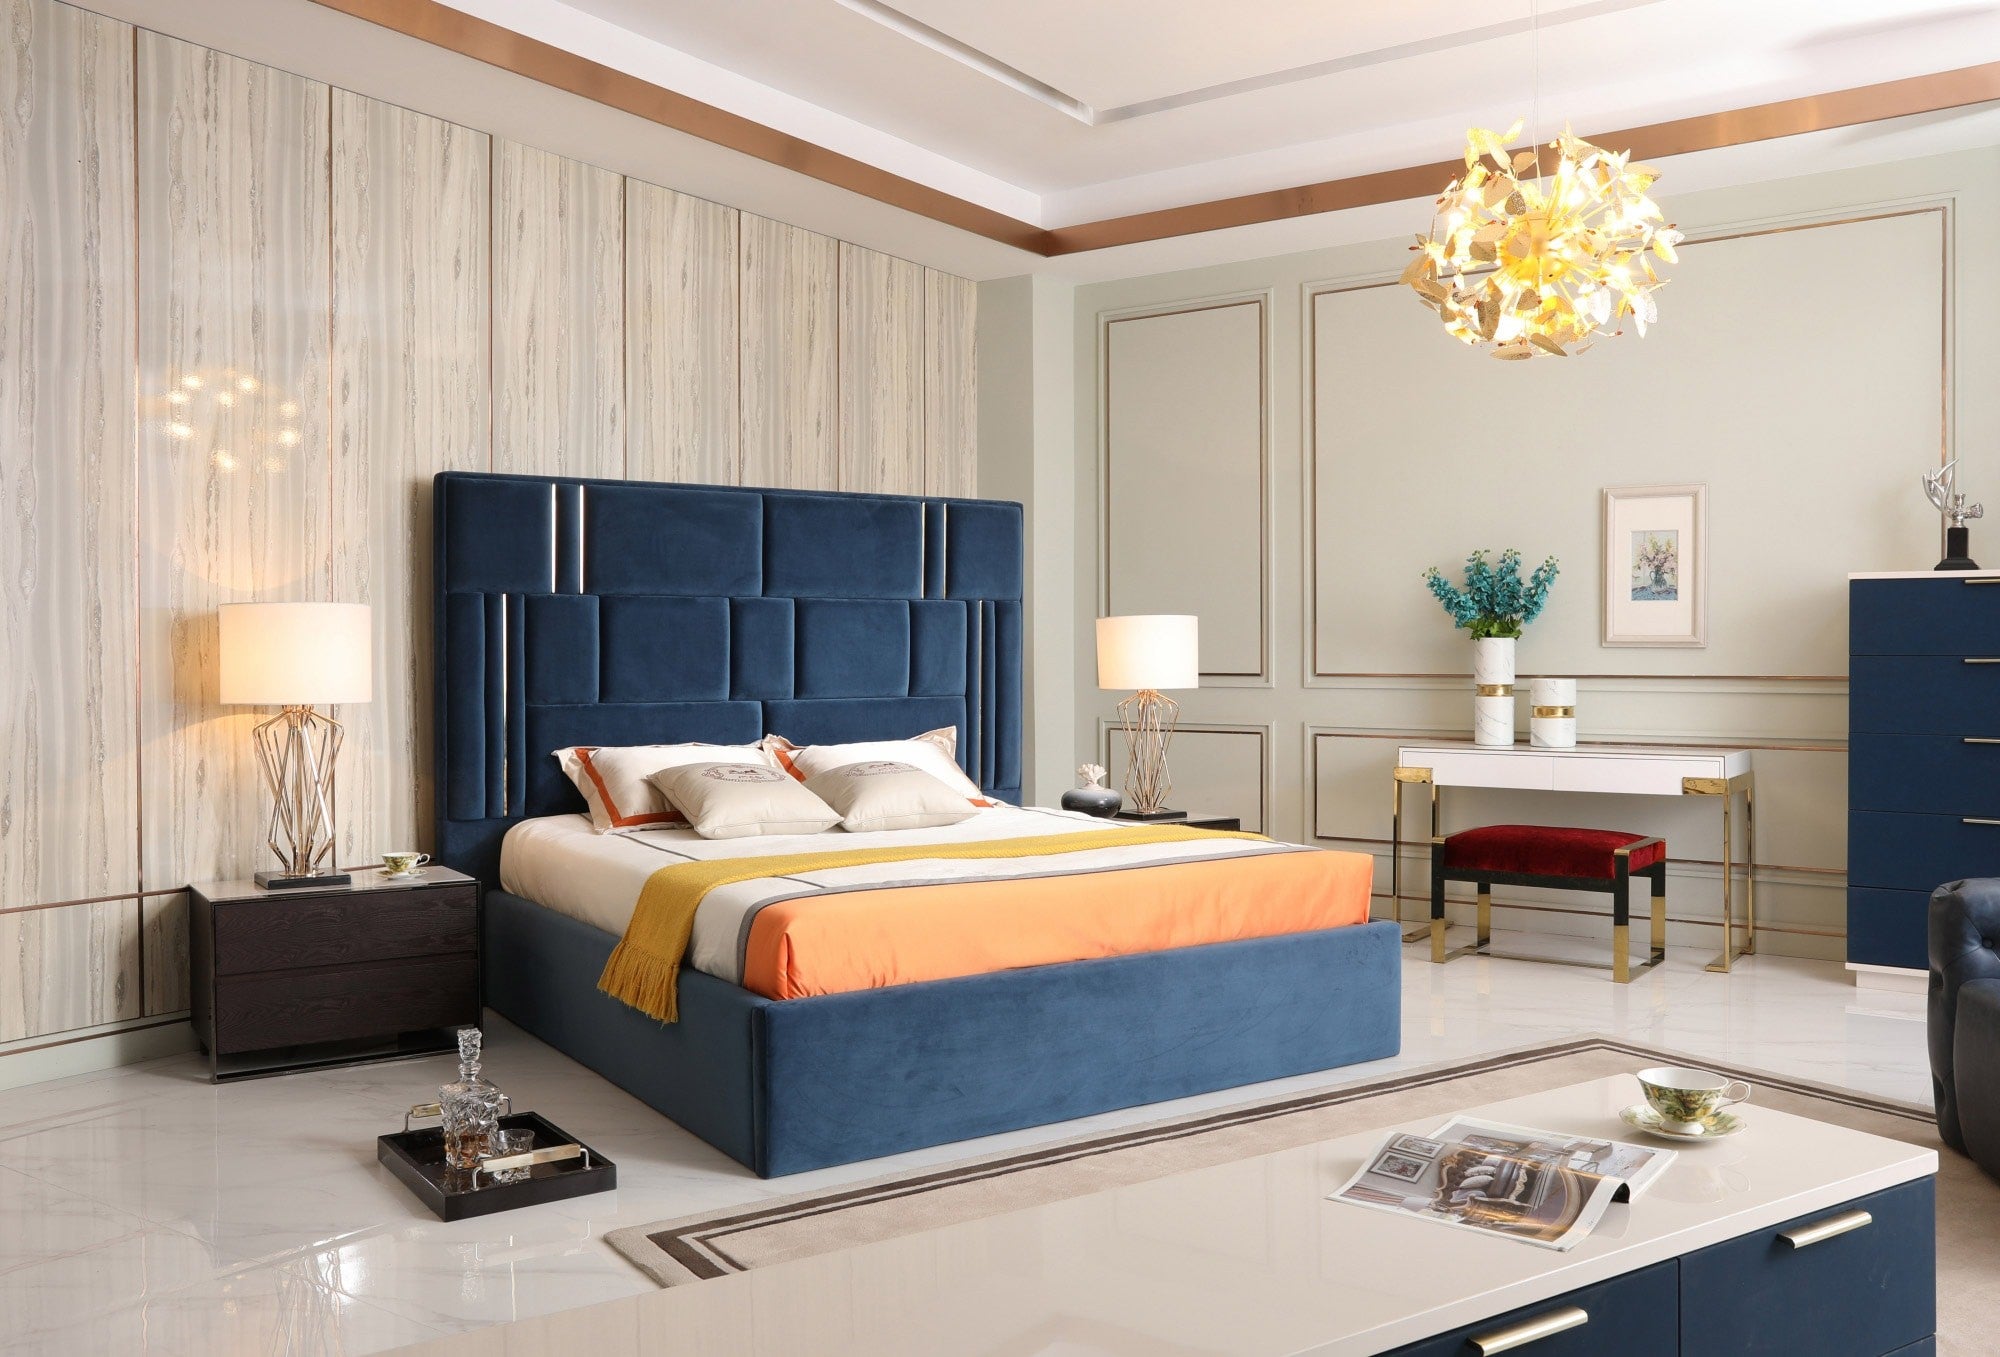 Modrest Adonis Blue Fabric Bed